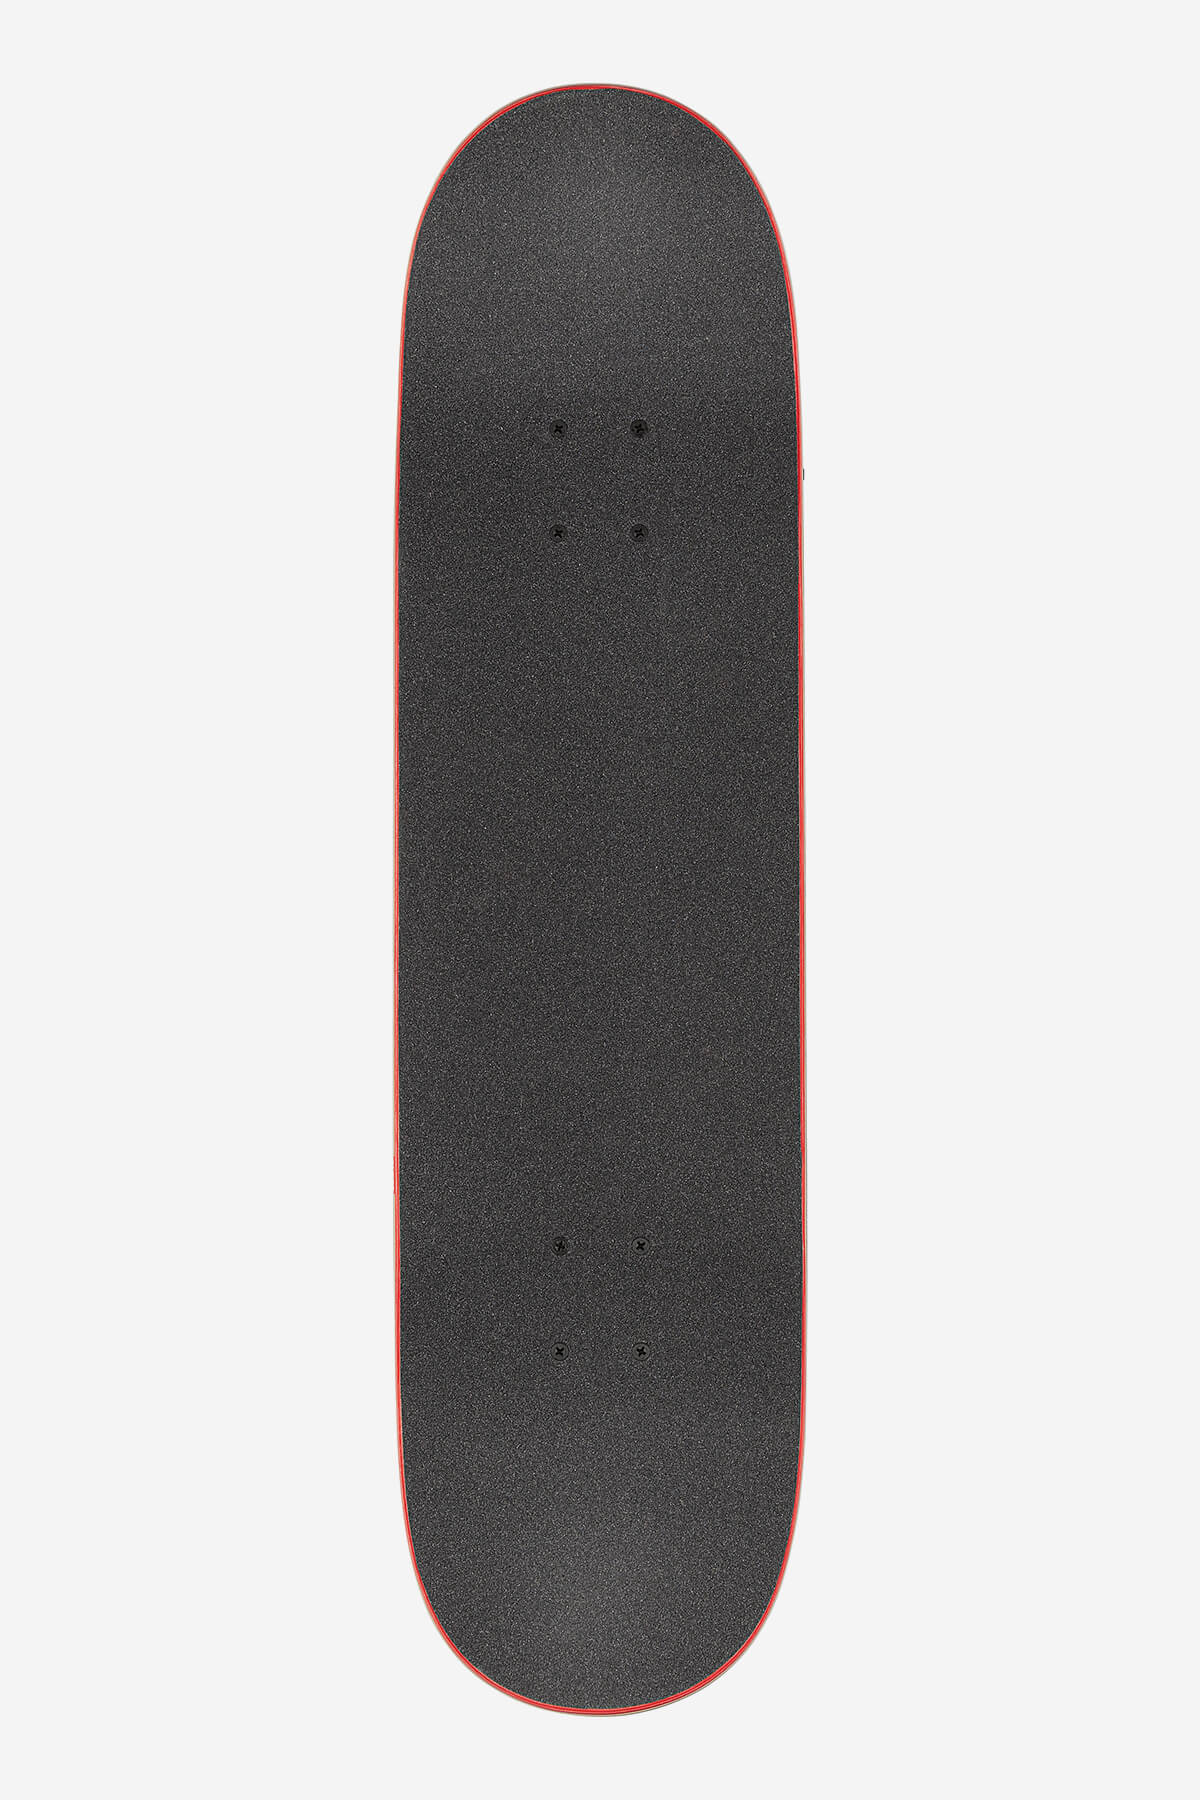 Globe - G1 Stack - Daydream - 8,25" Completo Skateboard